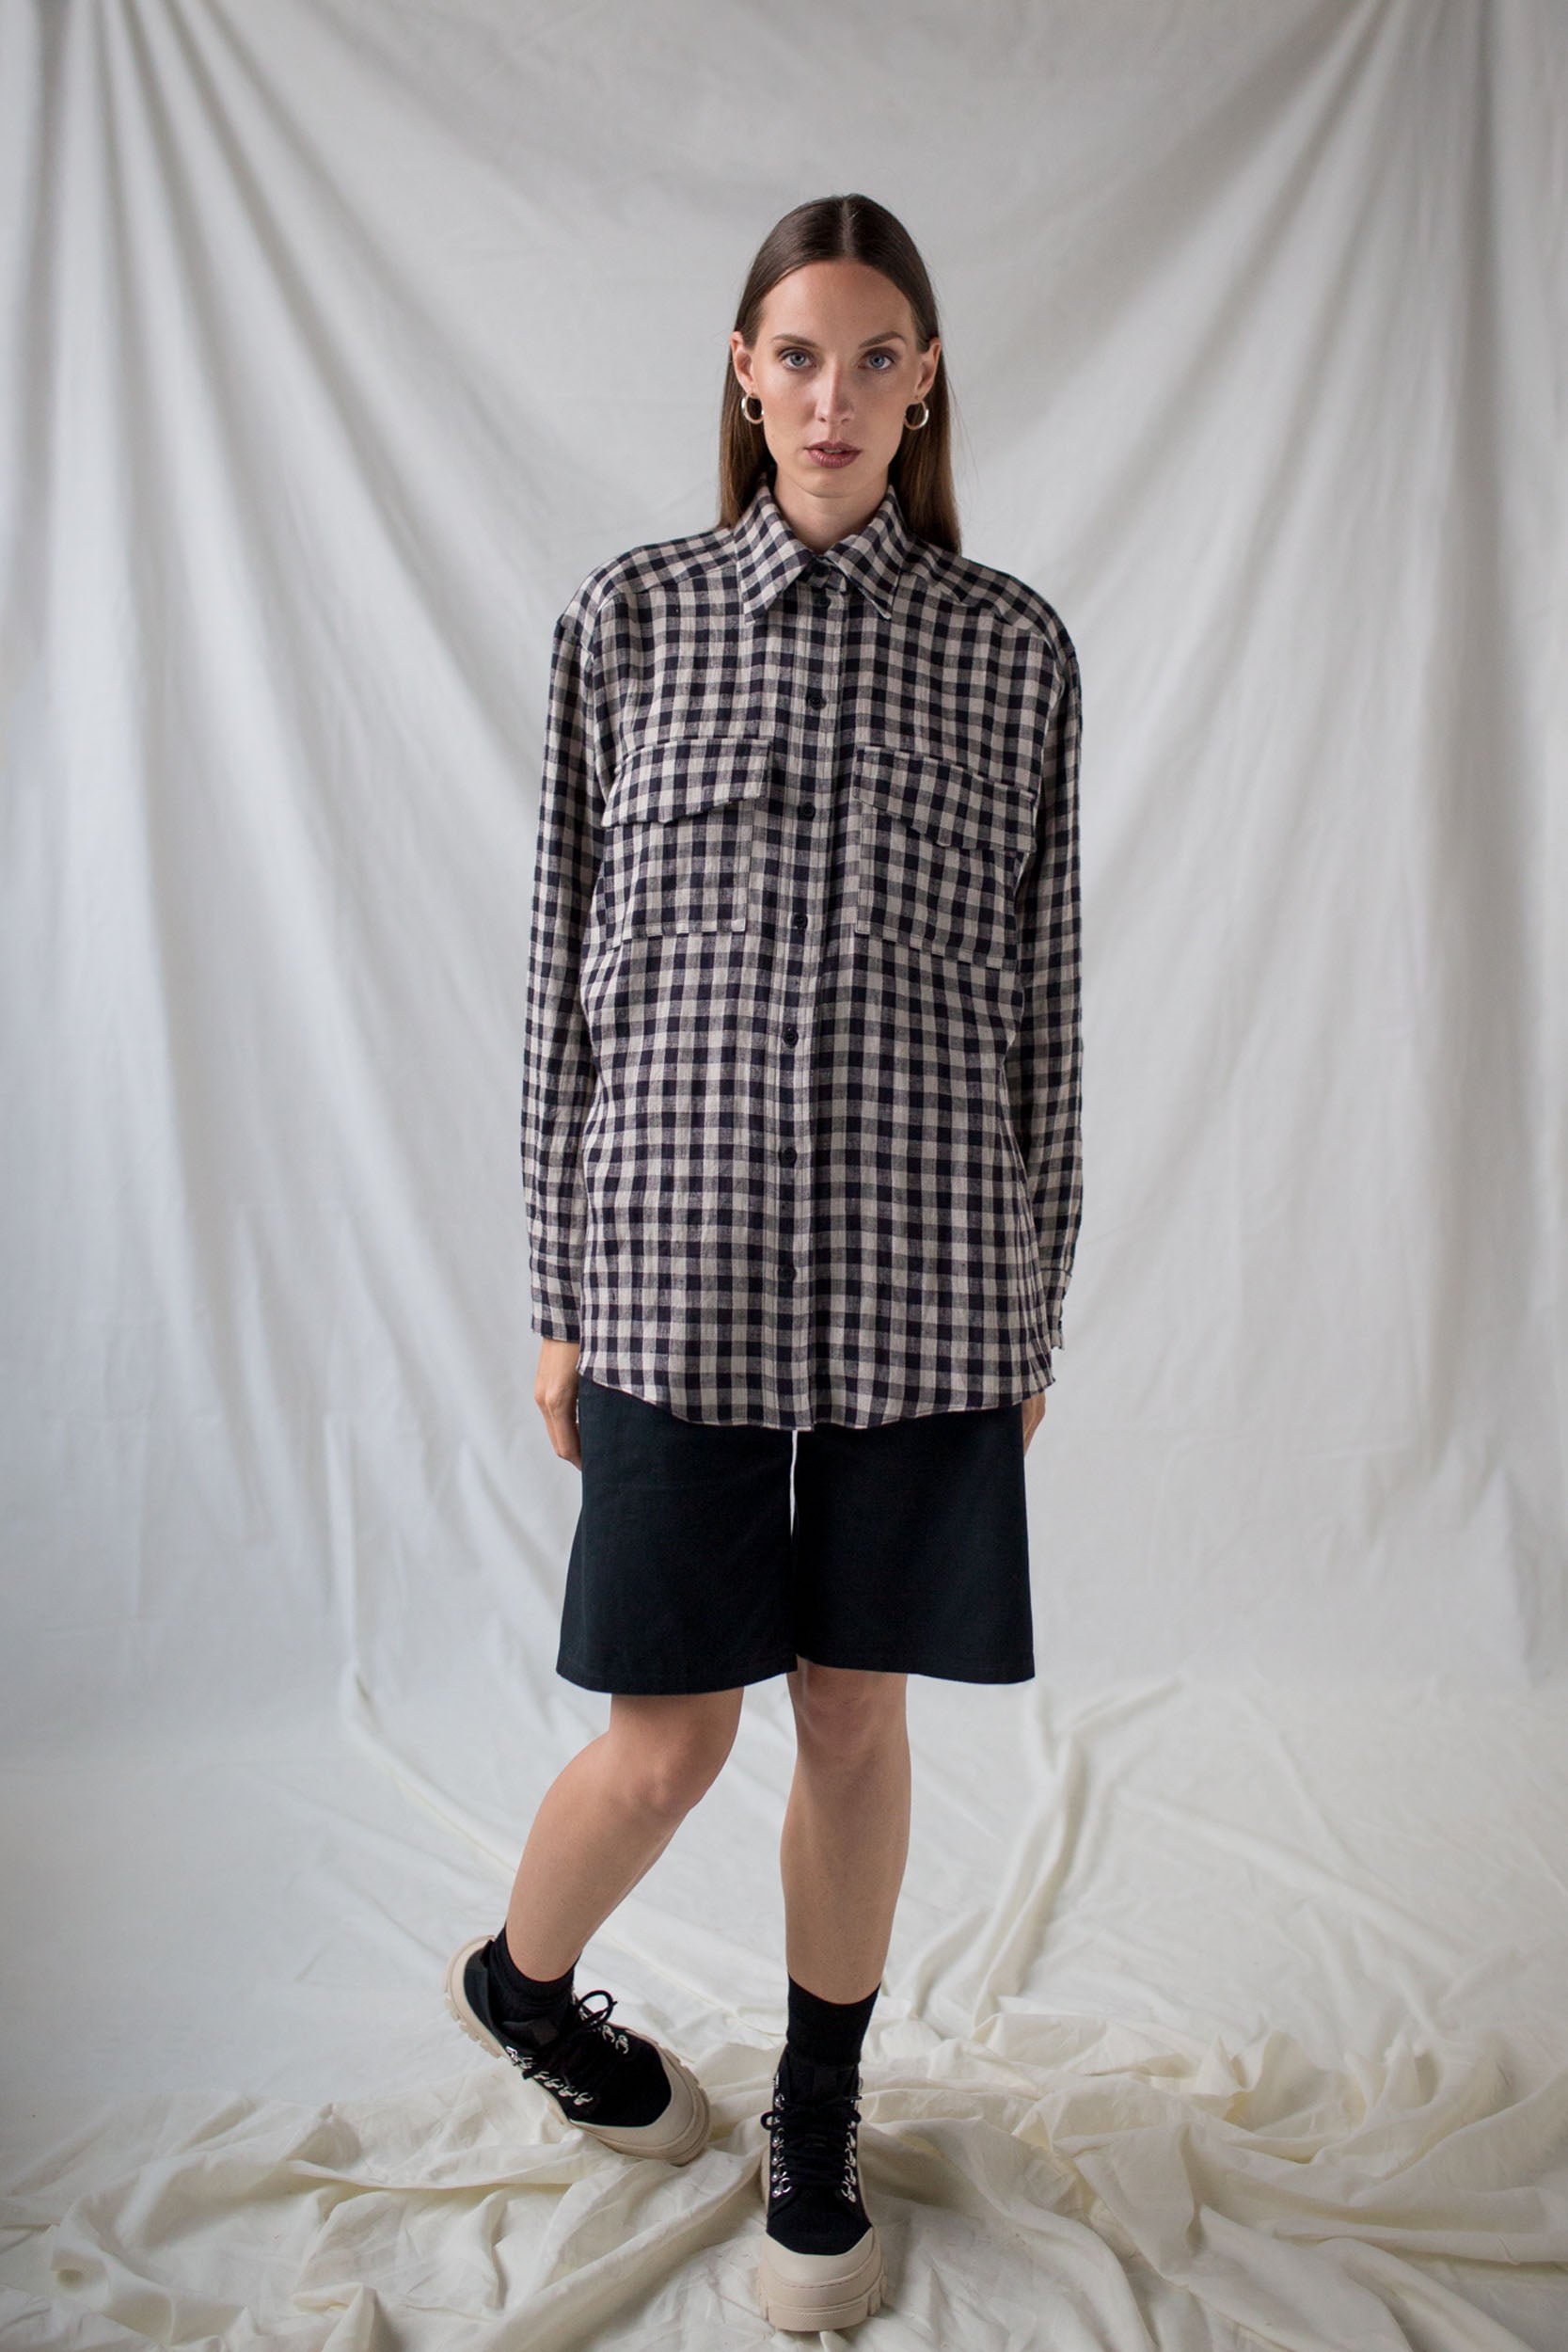 Black twill shorts and checkered linen shirt